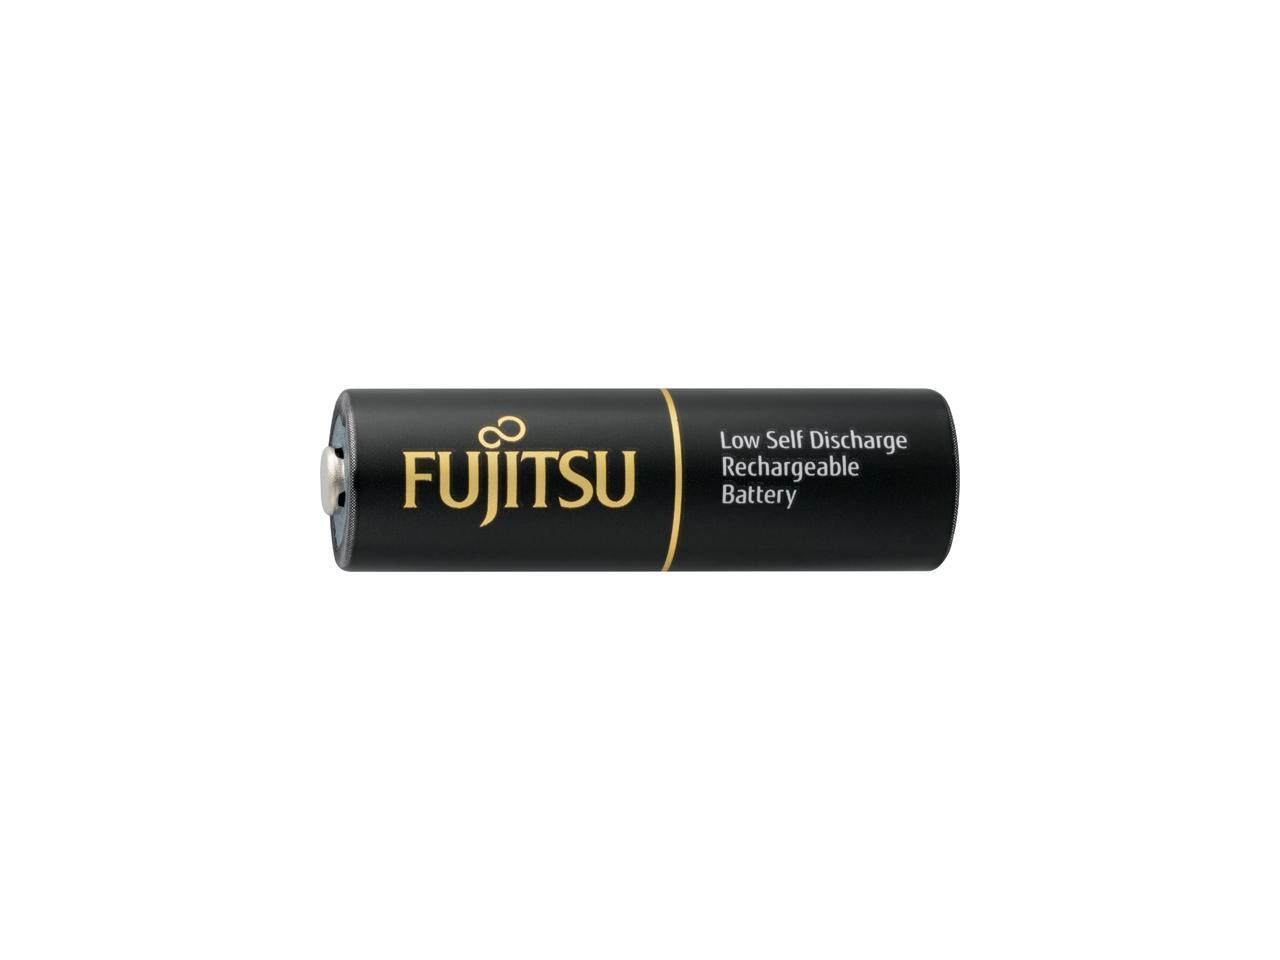 4x FUJITSU AA RECHARGEABLE Batteries HR6 2550mAh NiMH MN1500 